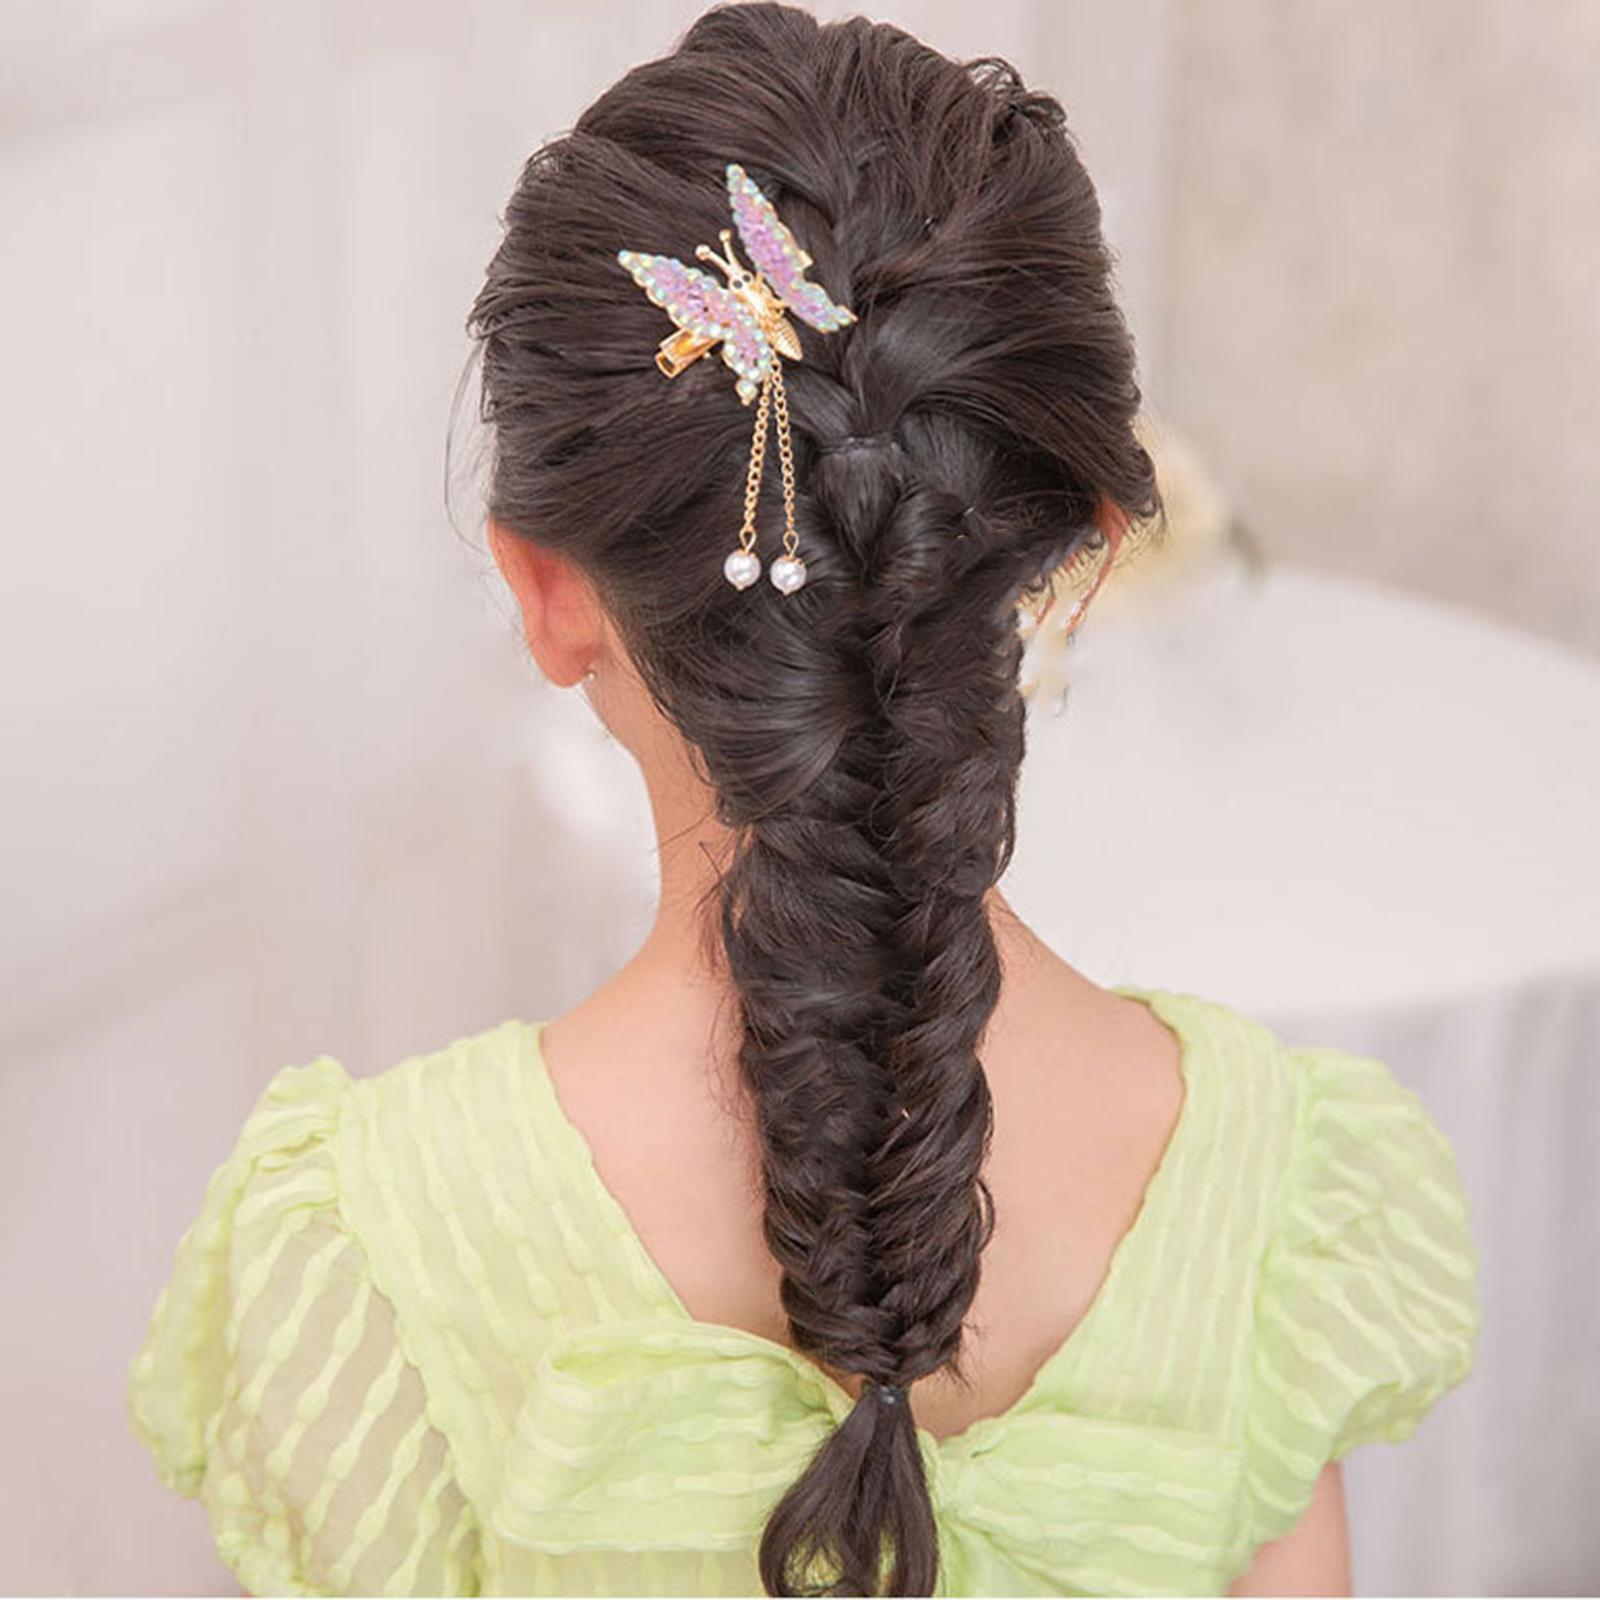 Butterfly Hair Clips Bangs Clip Headpiece for Women Girls Wedding Jewelry